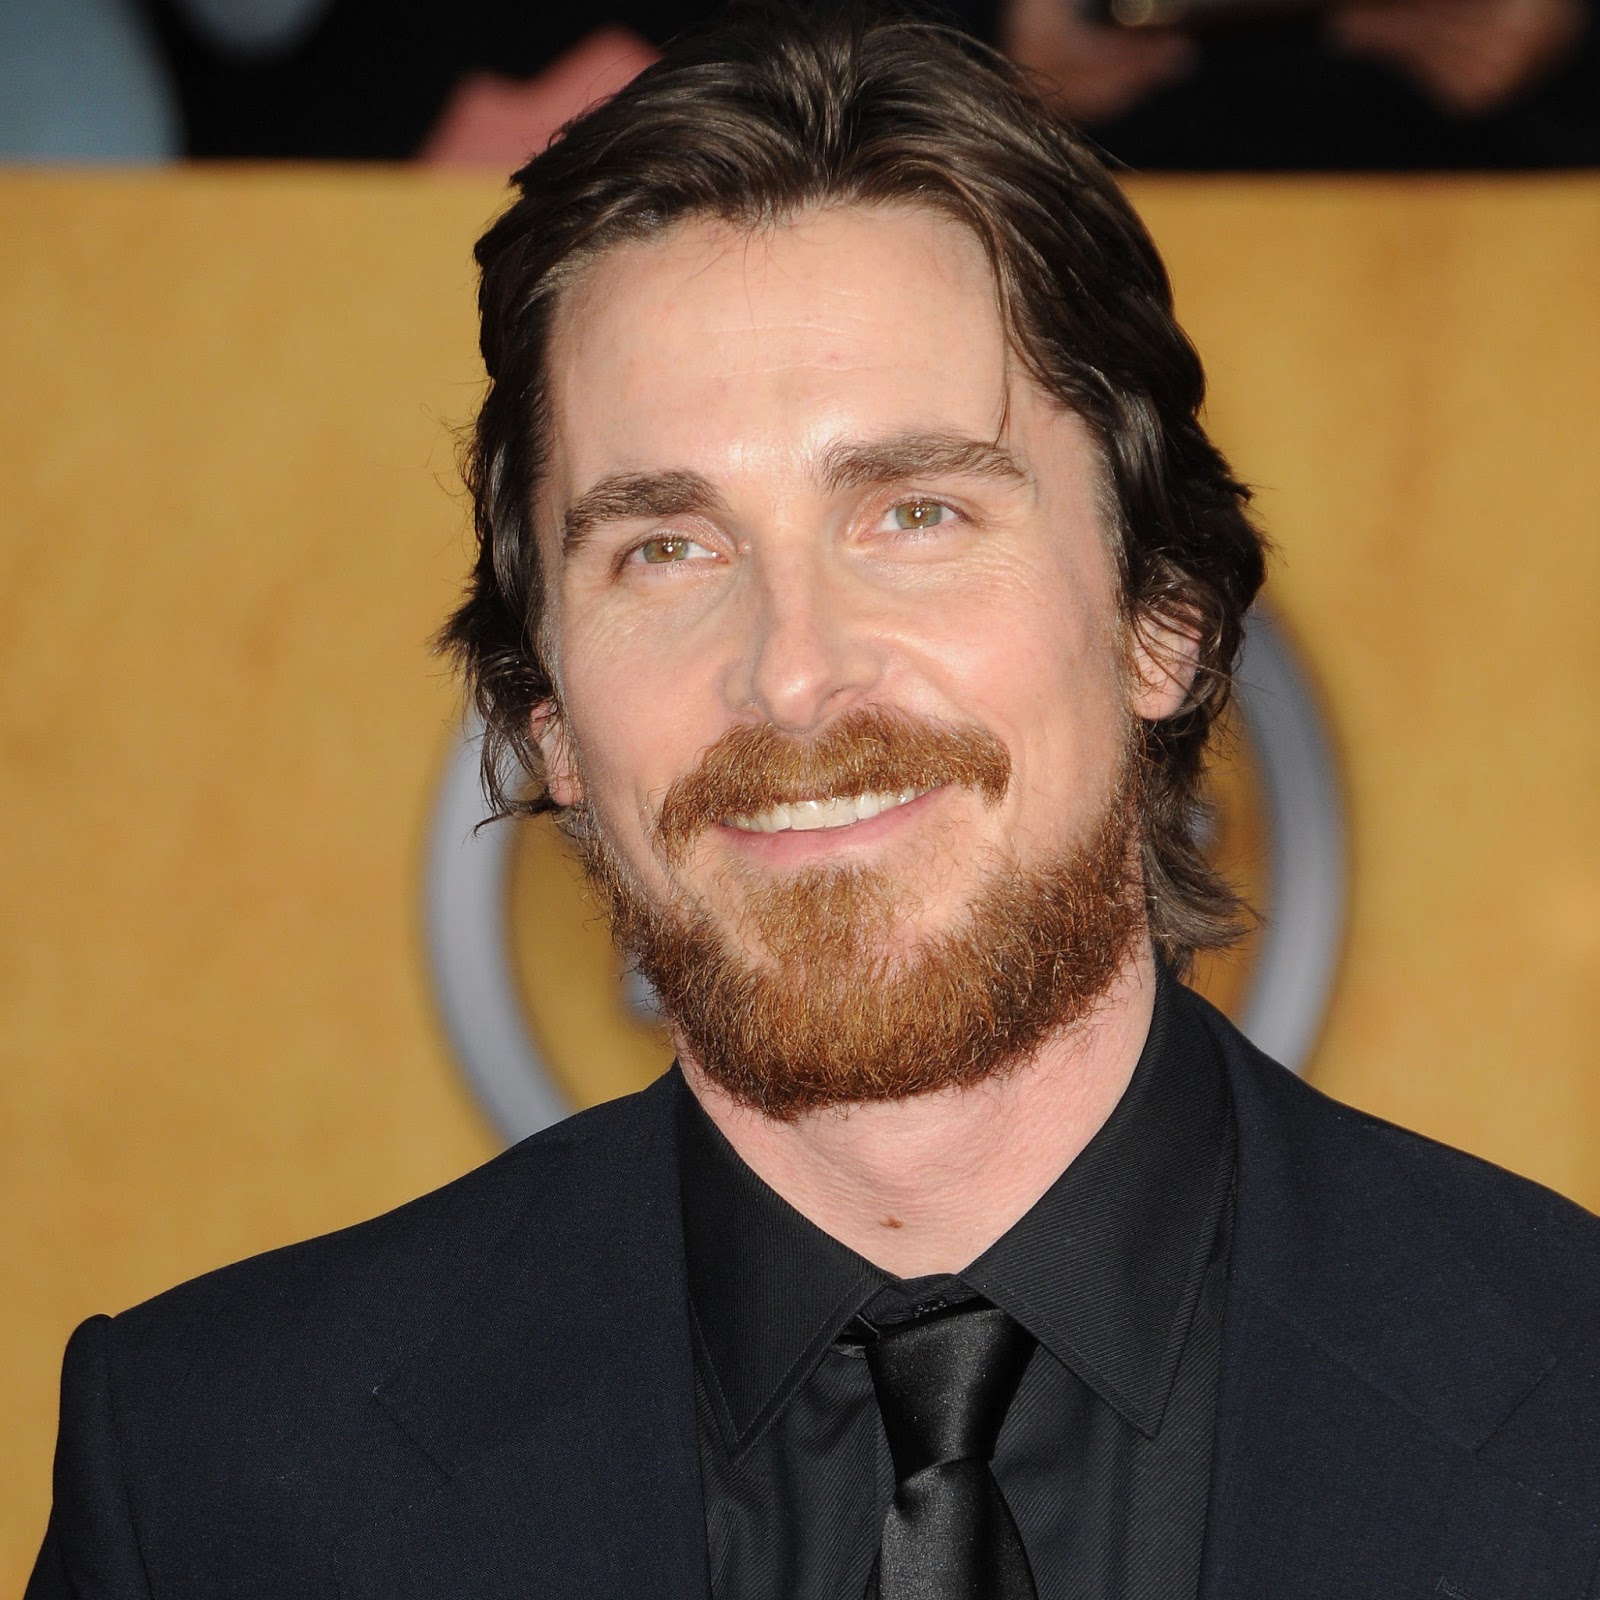 Christian Bale. Christian Bale Beard. Кристиан Бейл с бородой.